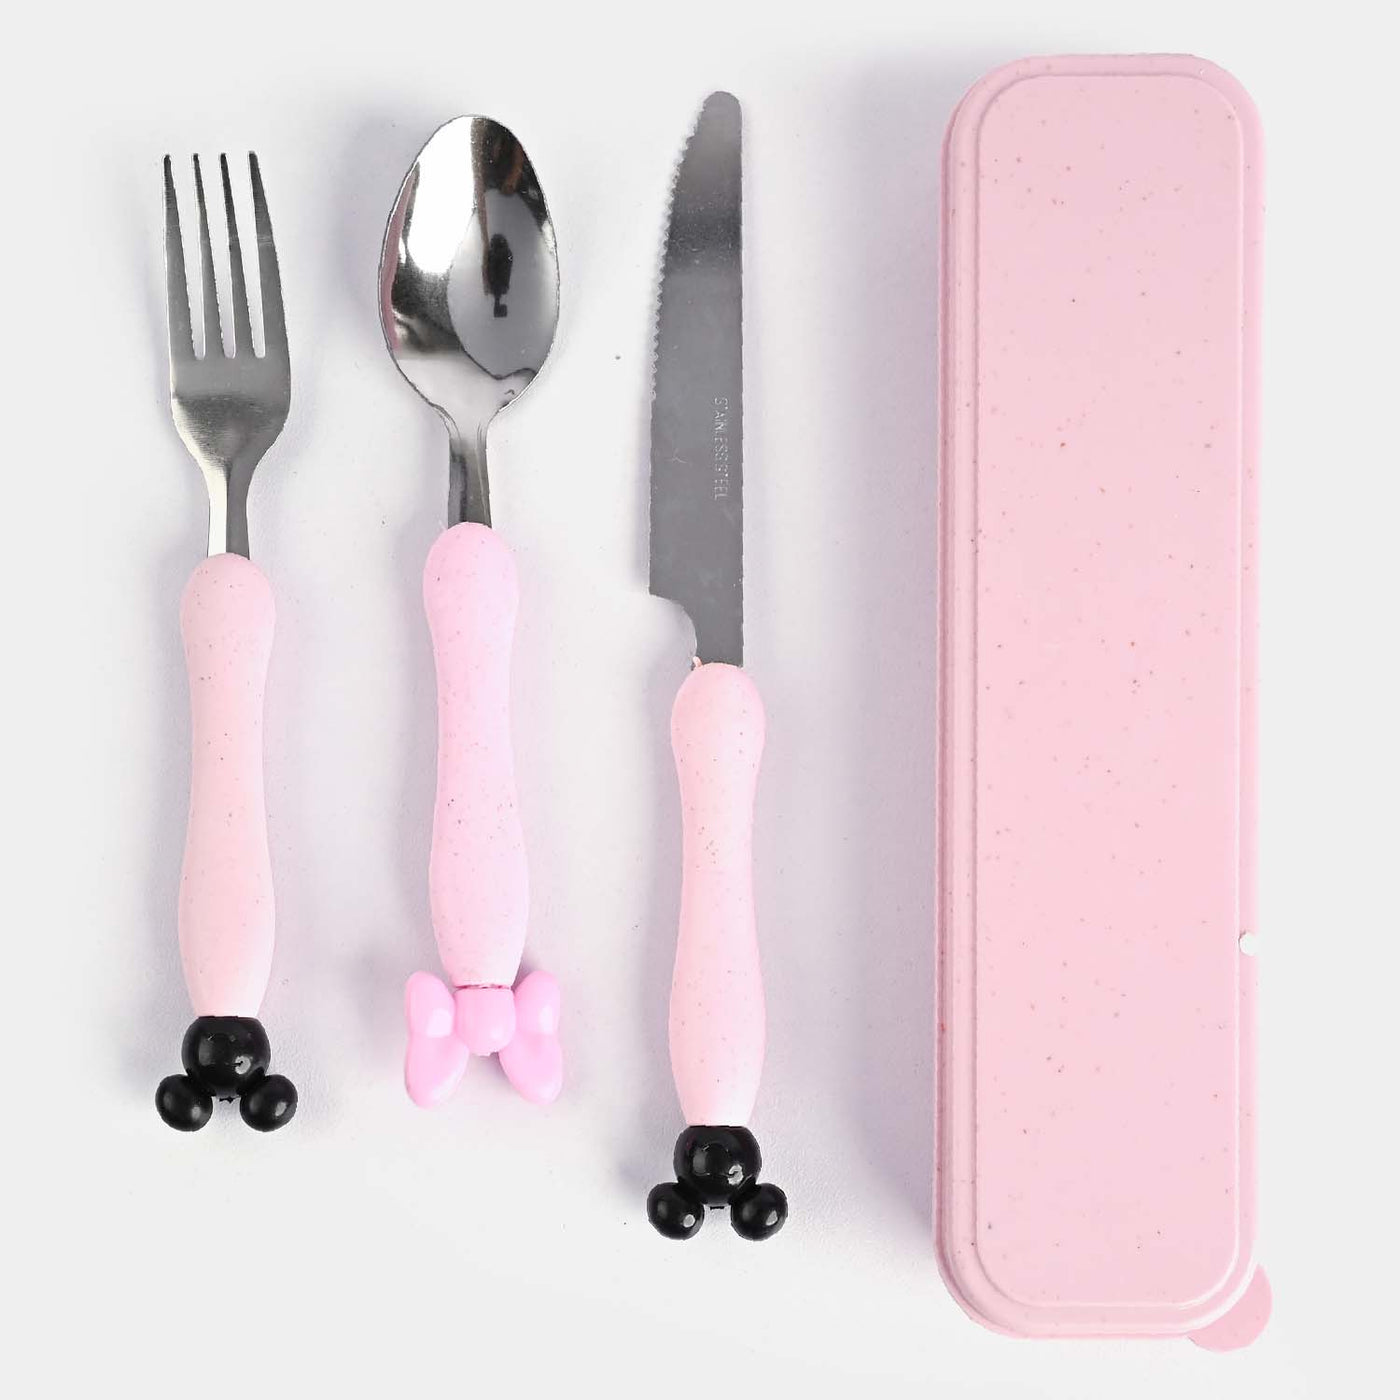 Stainless Steel Baby Tableware Cutlery Set | 3PCs